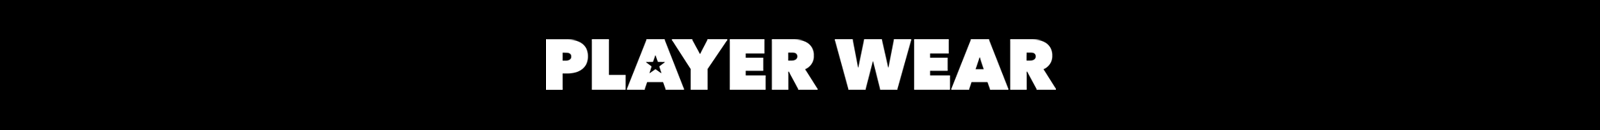 PlayerWear logo